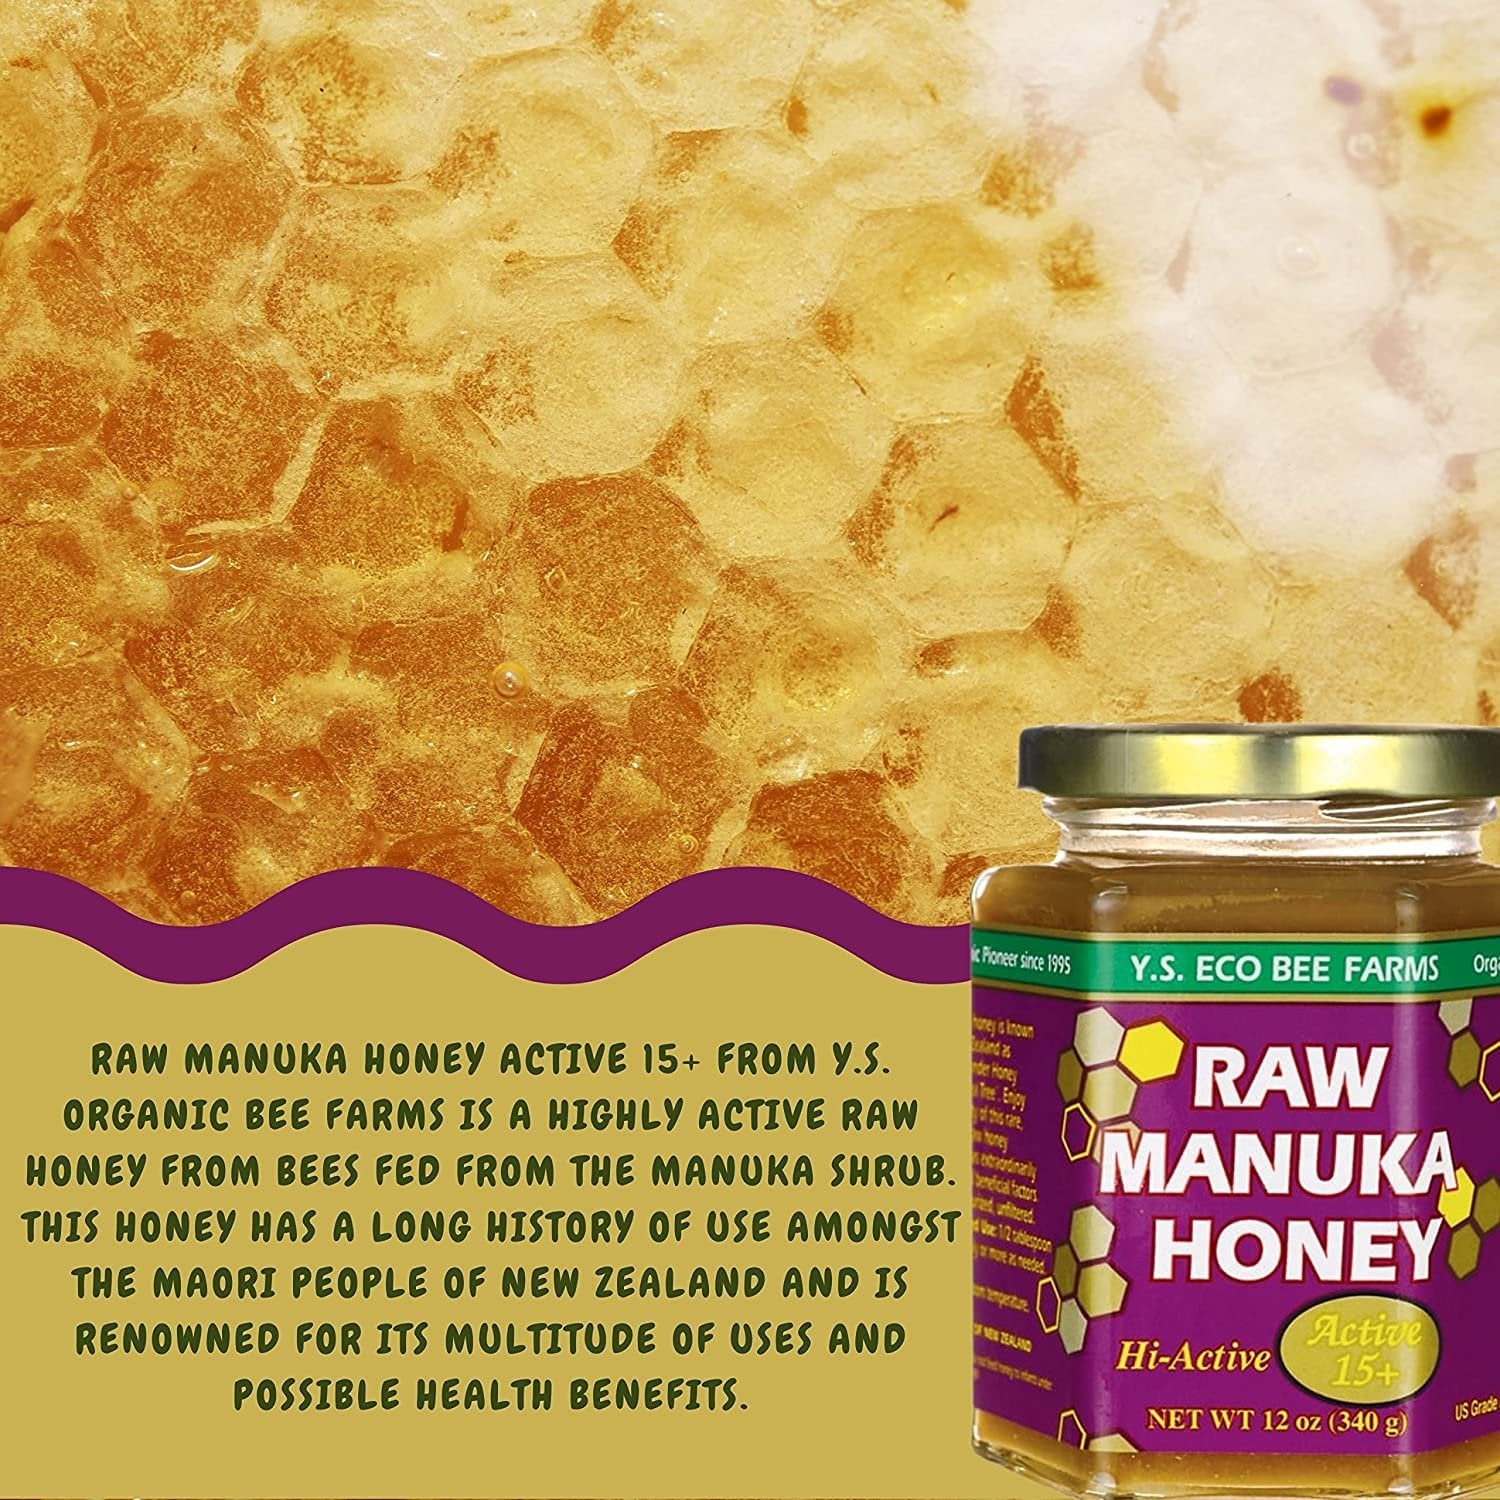 Y.S. Eco Bee Farms, 100% Certified Raw Manuka Honey, Hi-Active 15plus, Unpasteurized, Unfiltered, Exotic, Raw, Kosher, Gluten Free, Wonder Honey Of The Tea Tree", 12 Oz, 2 Jars with Bonus Key Chain